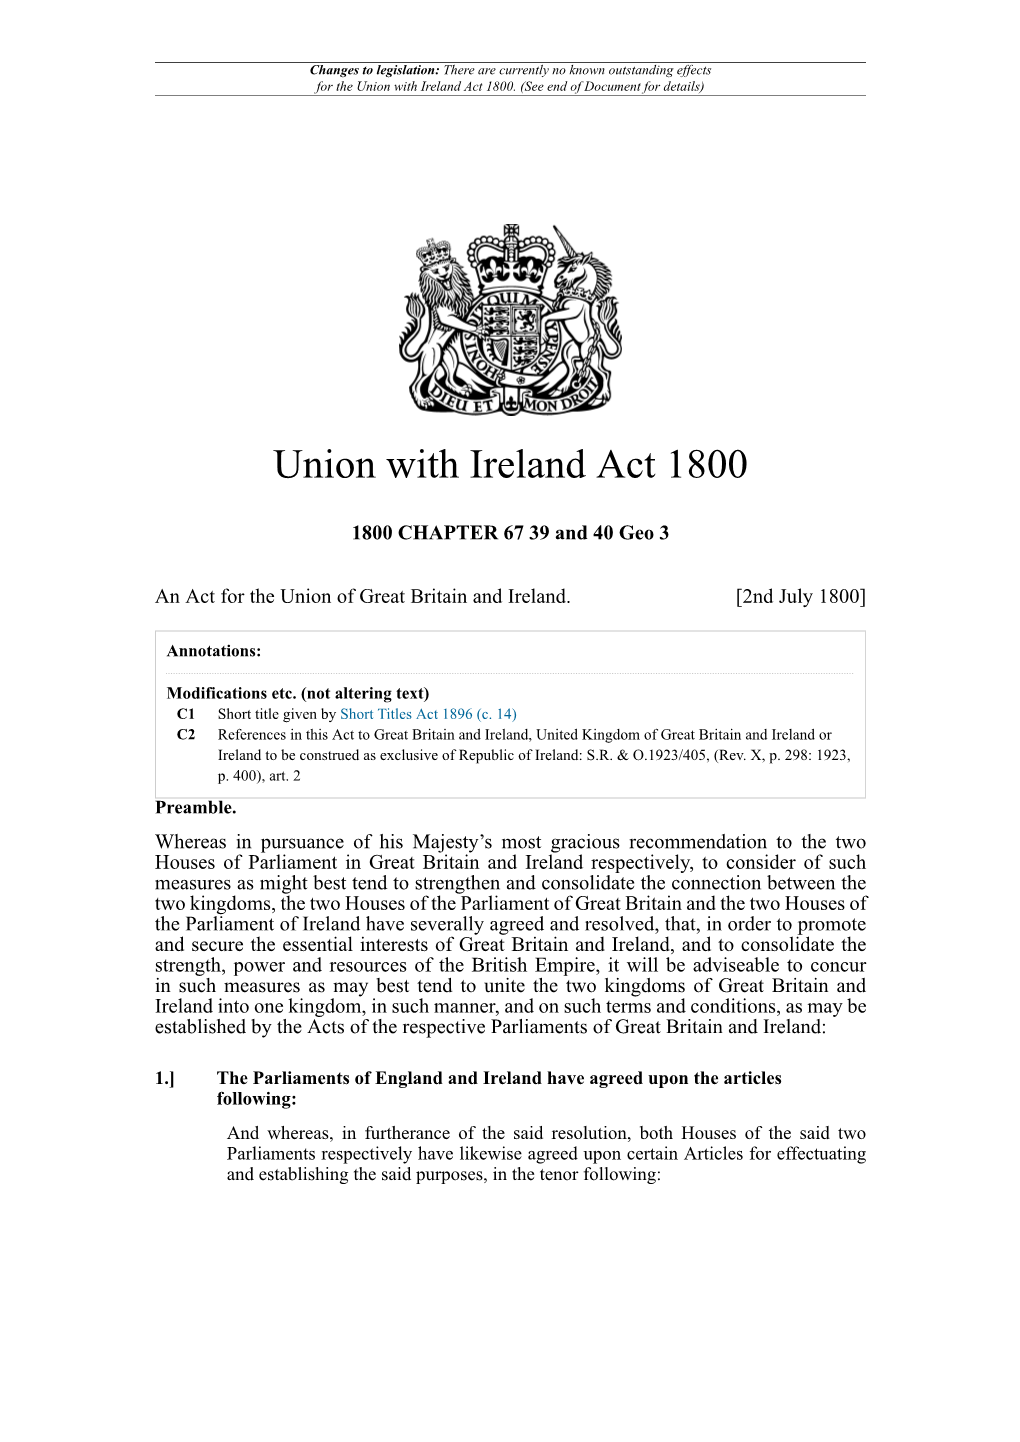 Union with Ireland Act 1800